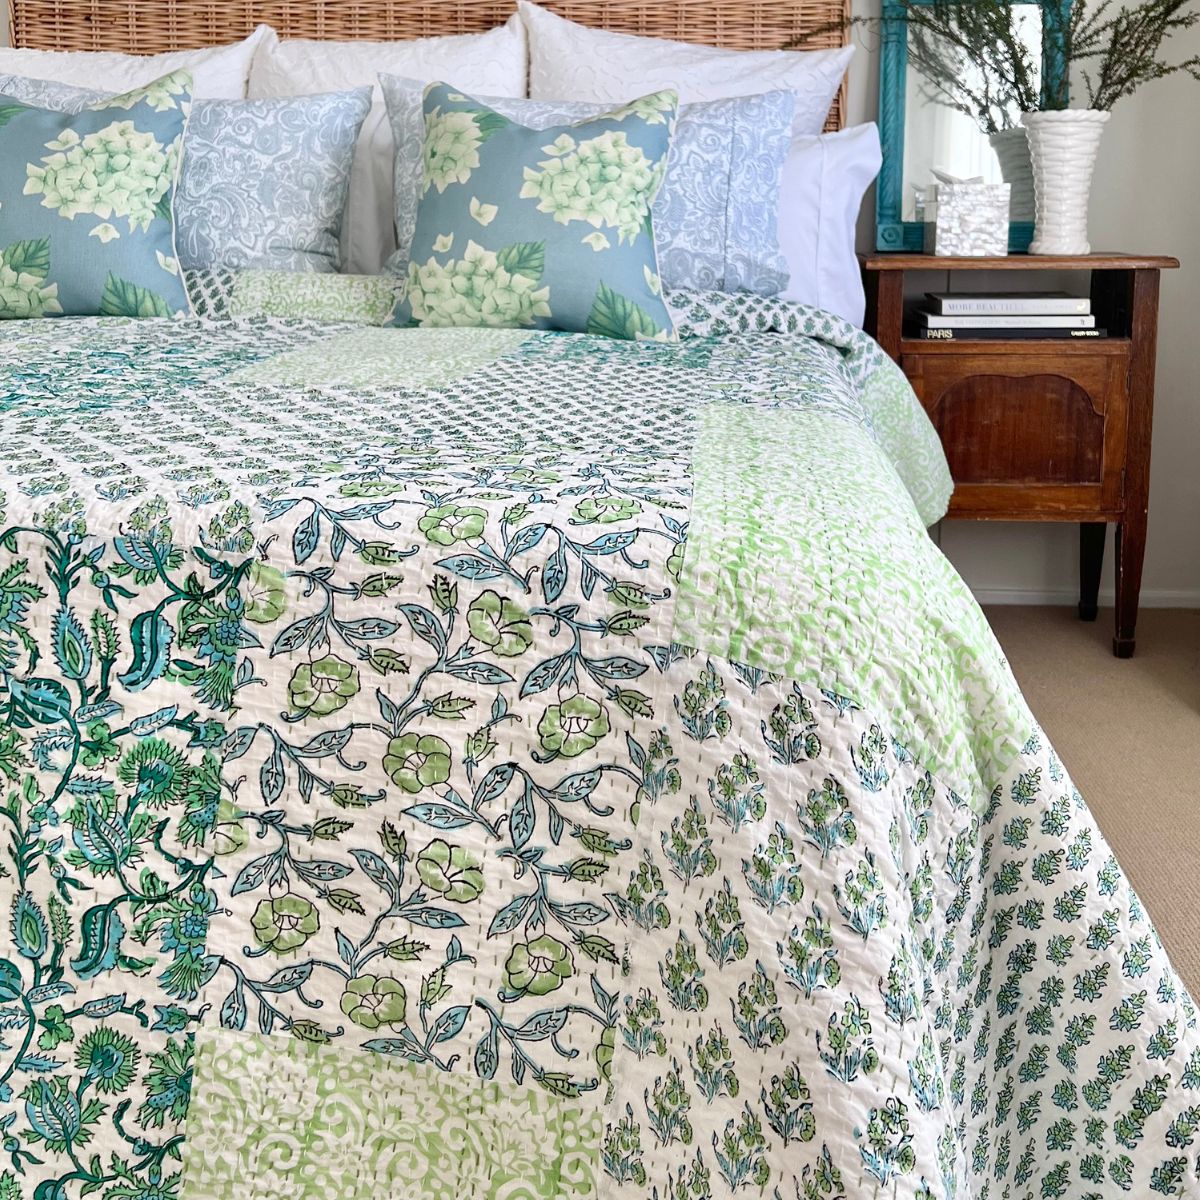 Kantha Quilts/Indian Bedspreads